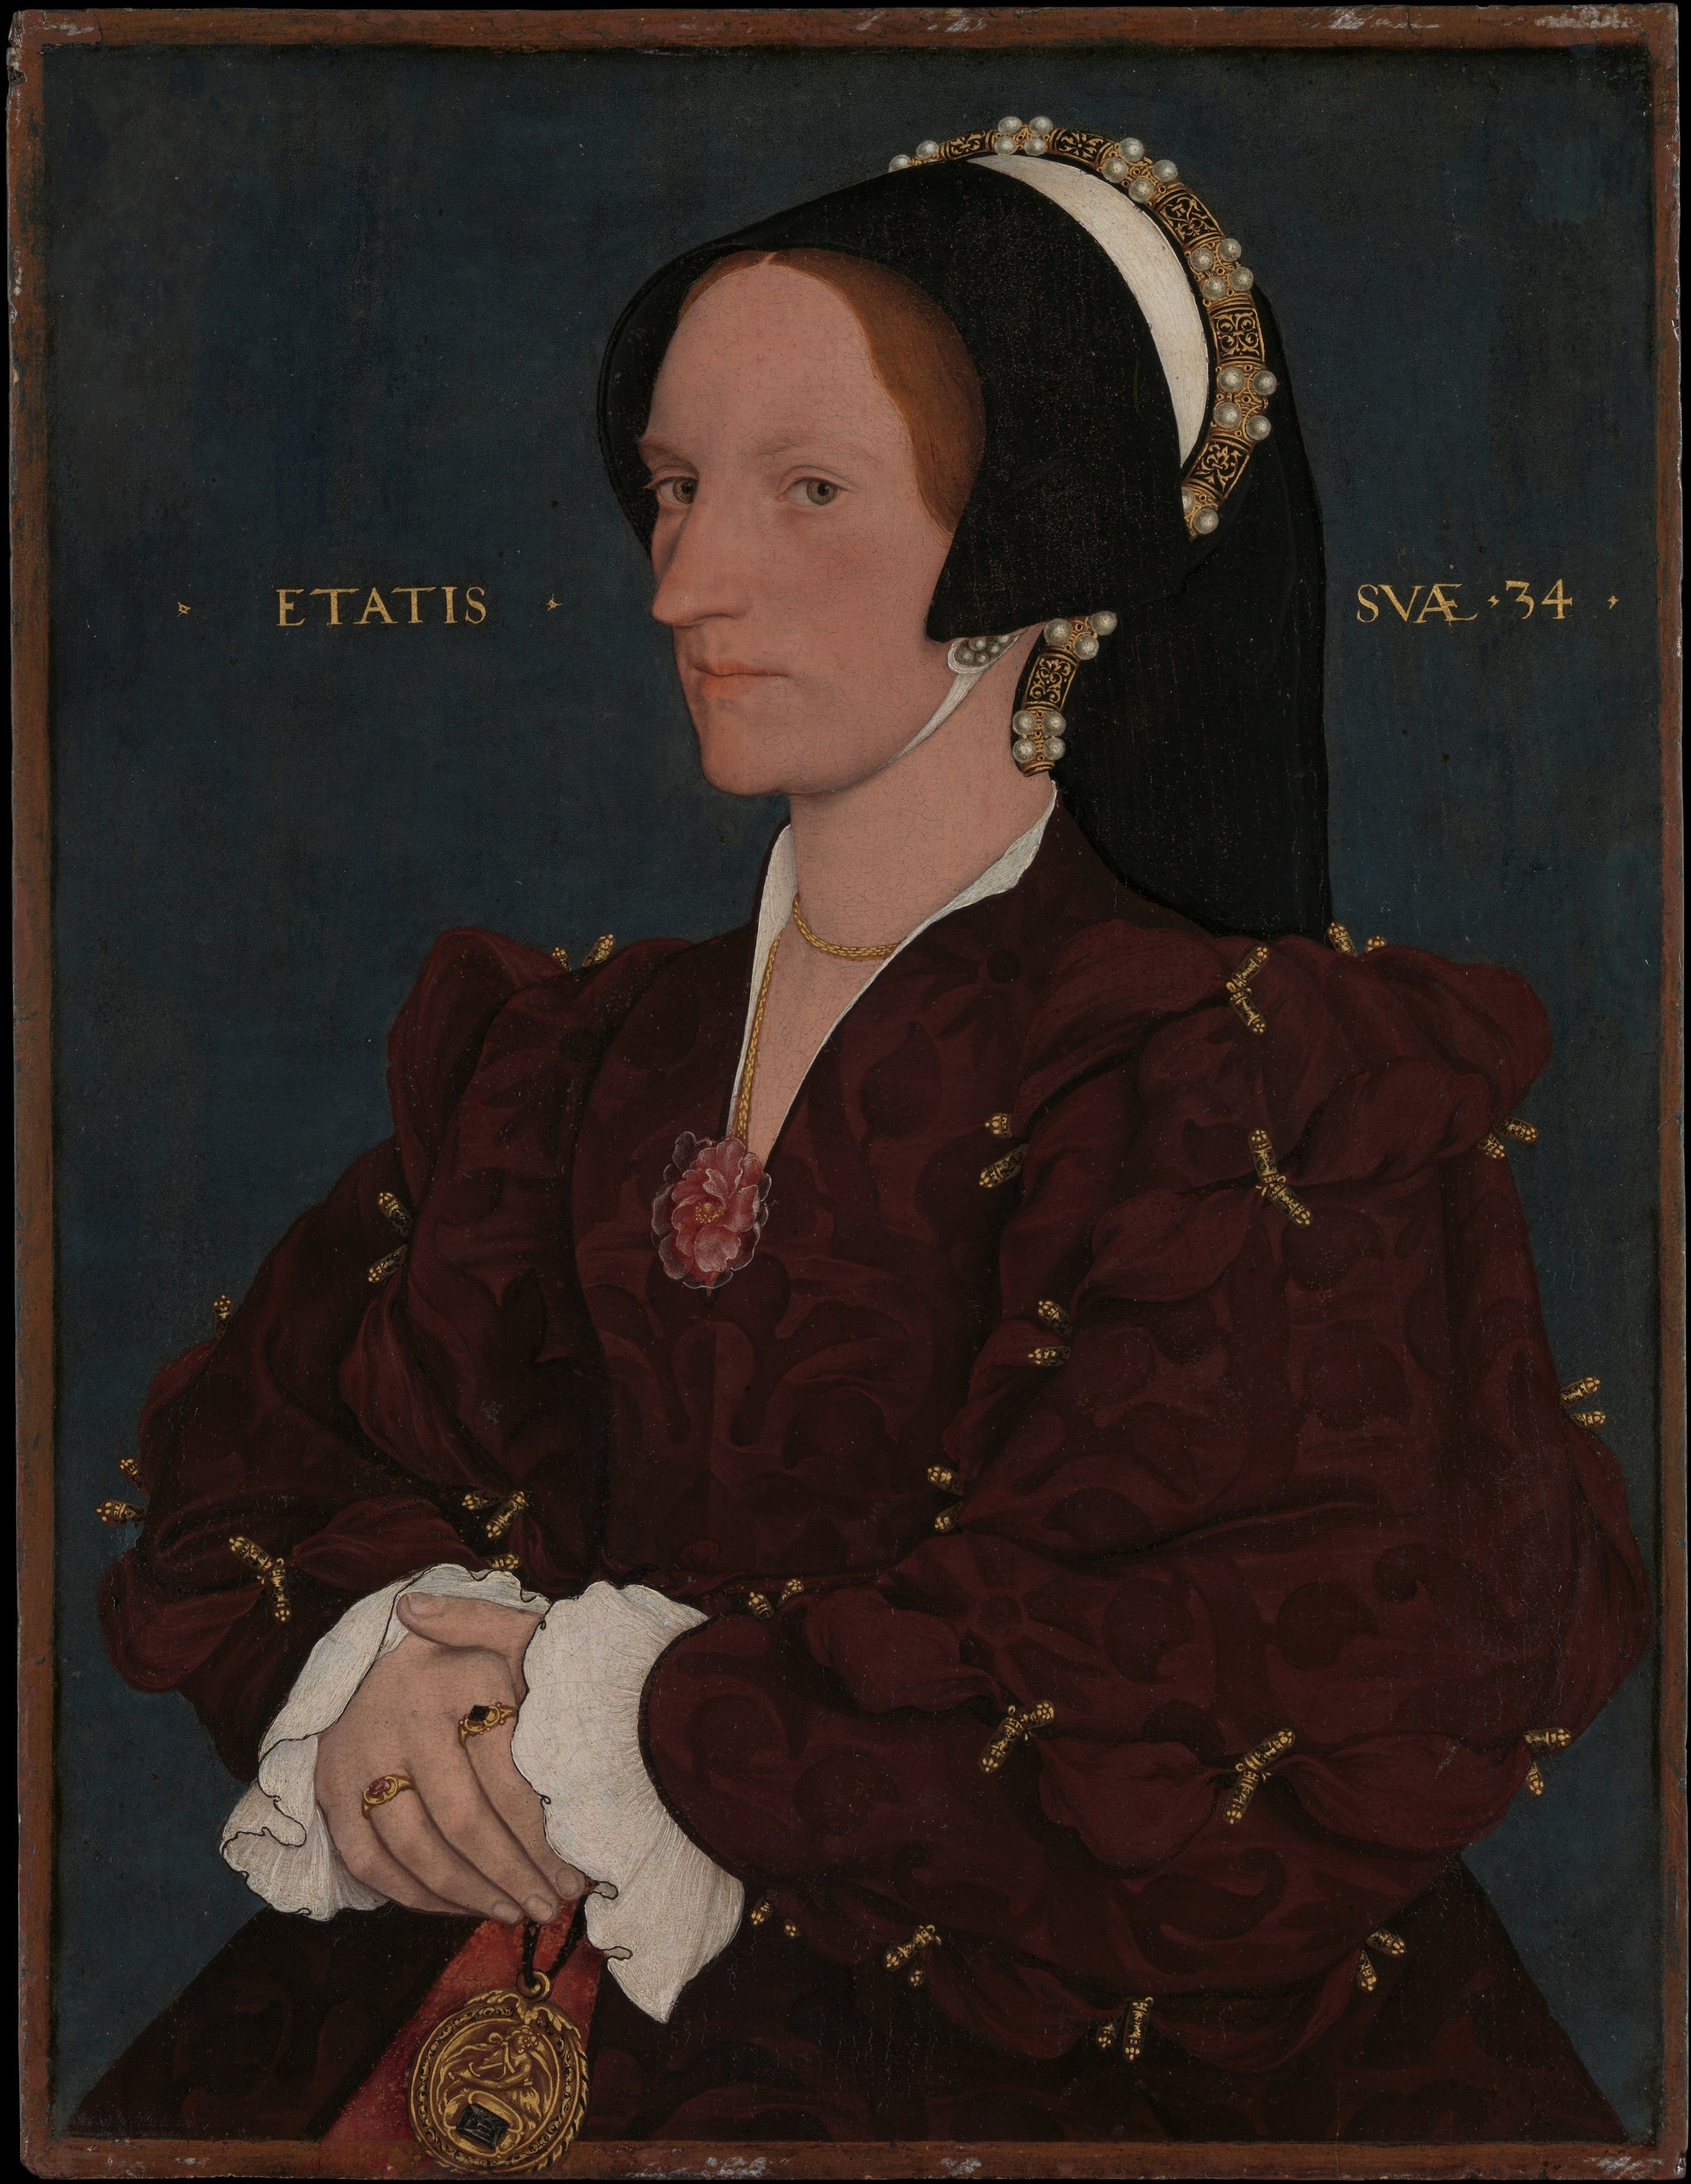 Margaret Wyatt, Lady Lee by Hans Holbein the Younger - 1540 - 42.5 x 32.7 cm Museo Metropolitano de Arte